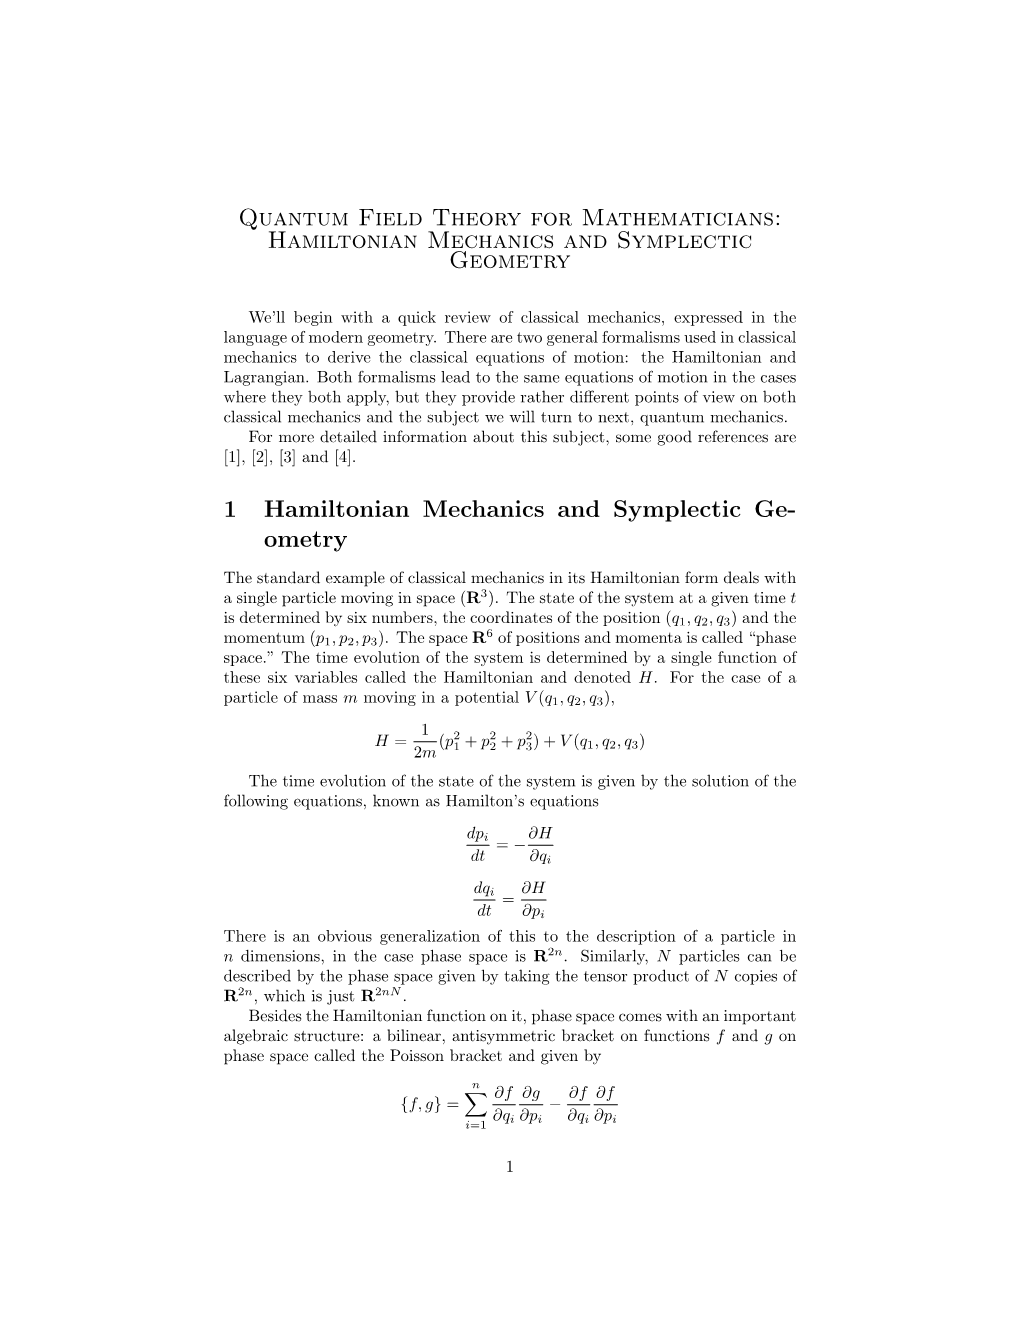 Hamiltonian Mechanics and Symplectic Geometry